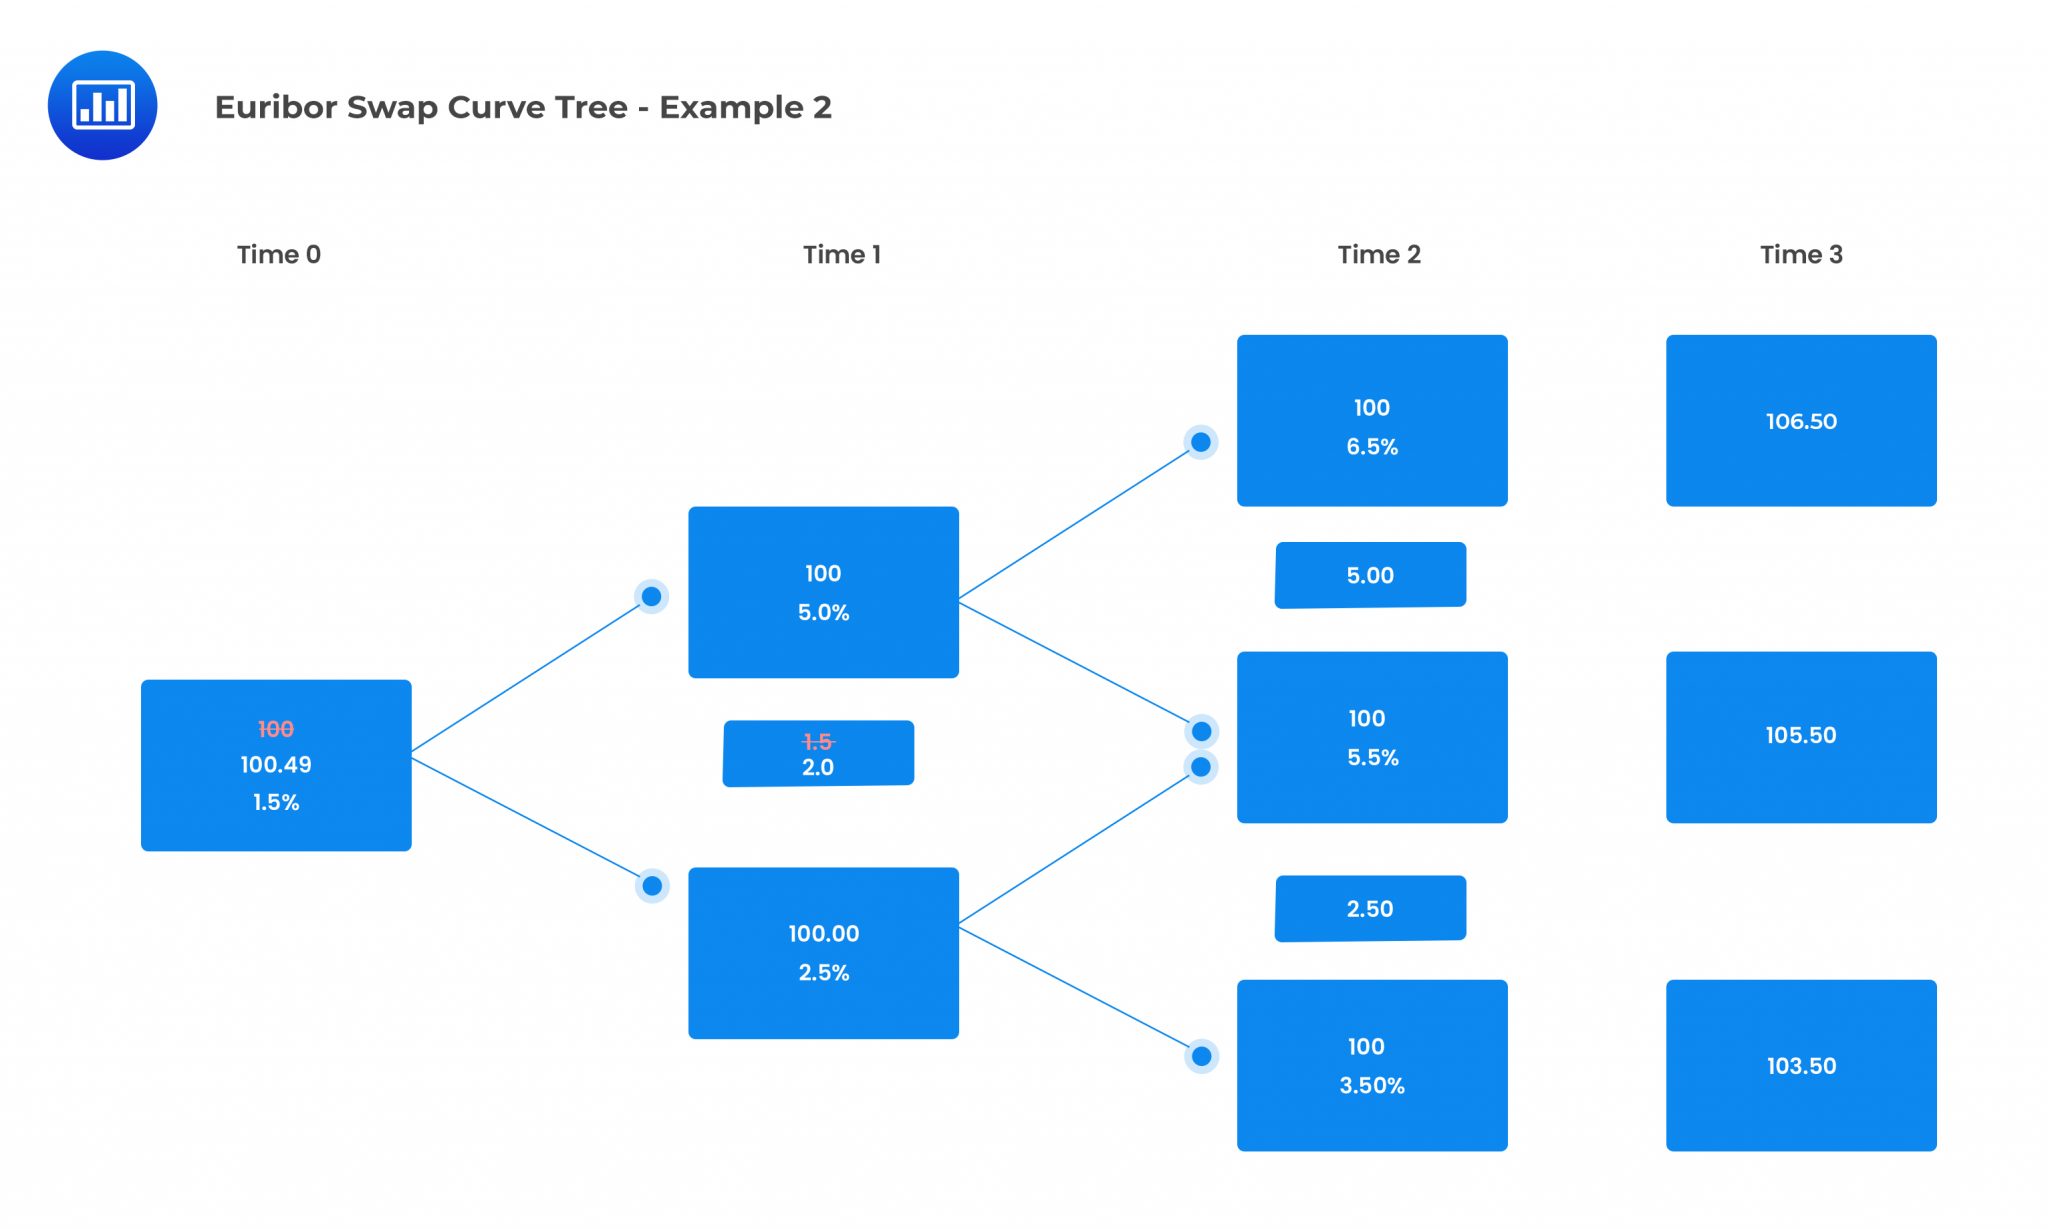 3 - Euribor Swap Curve Tree - Example 2